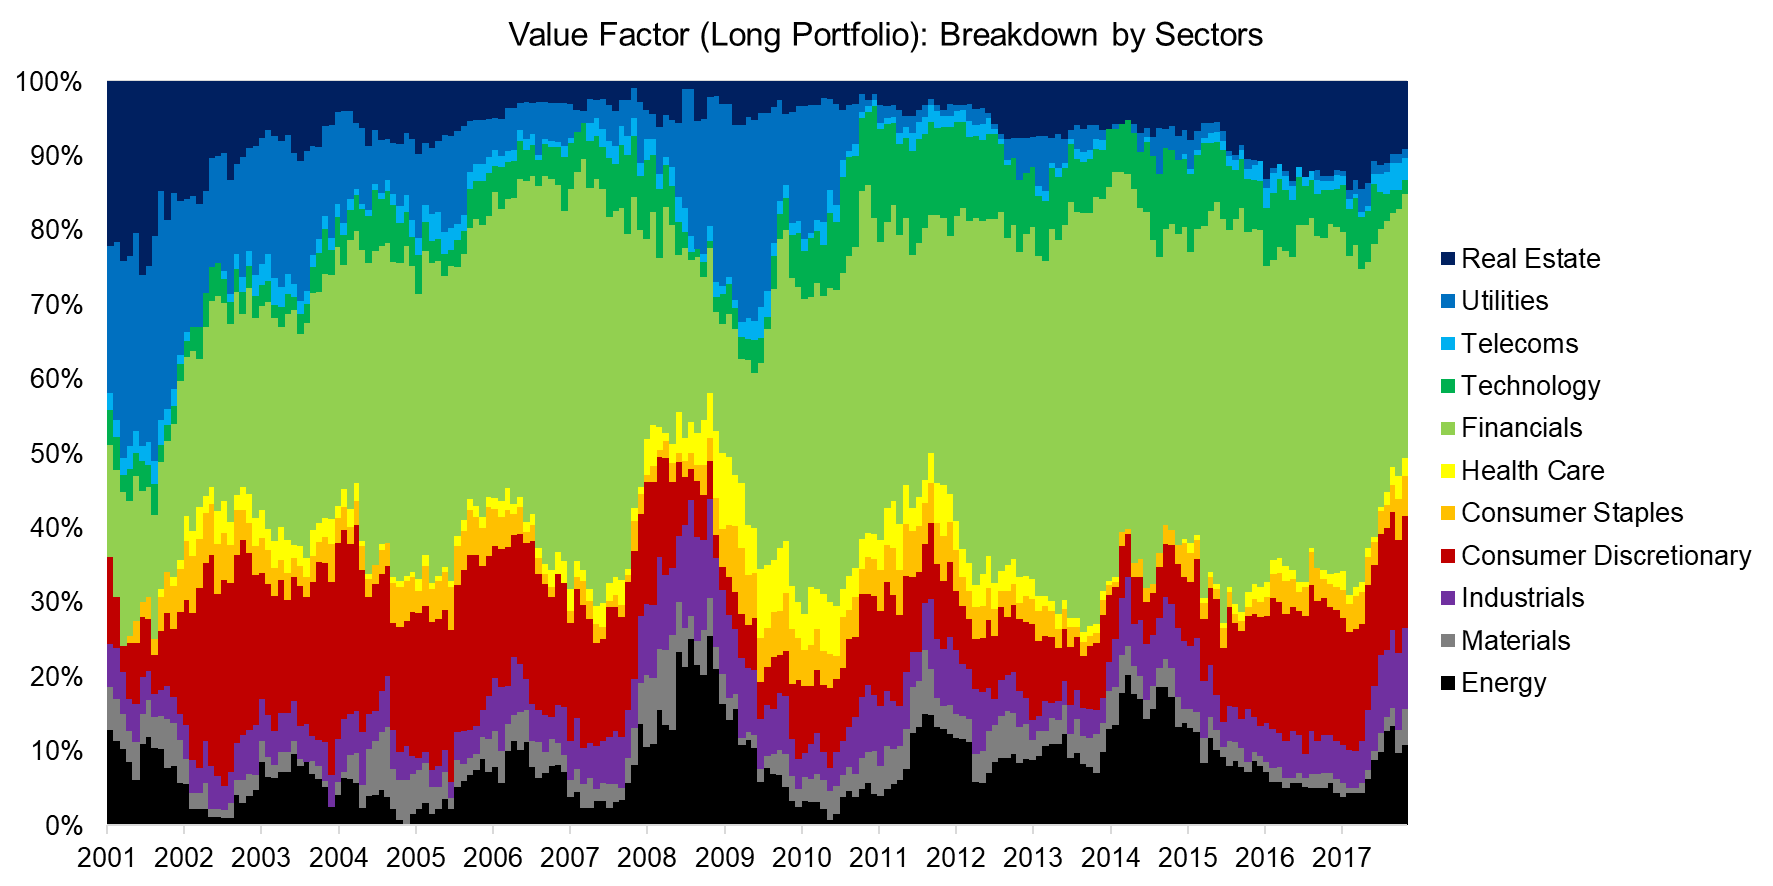 Value Factor (Long Portfolio) Breakdown by Sectors